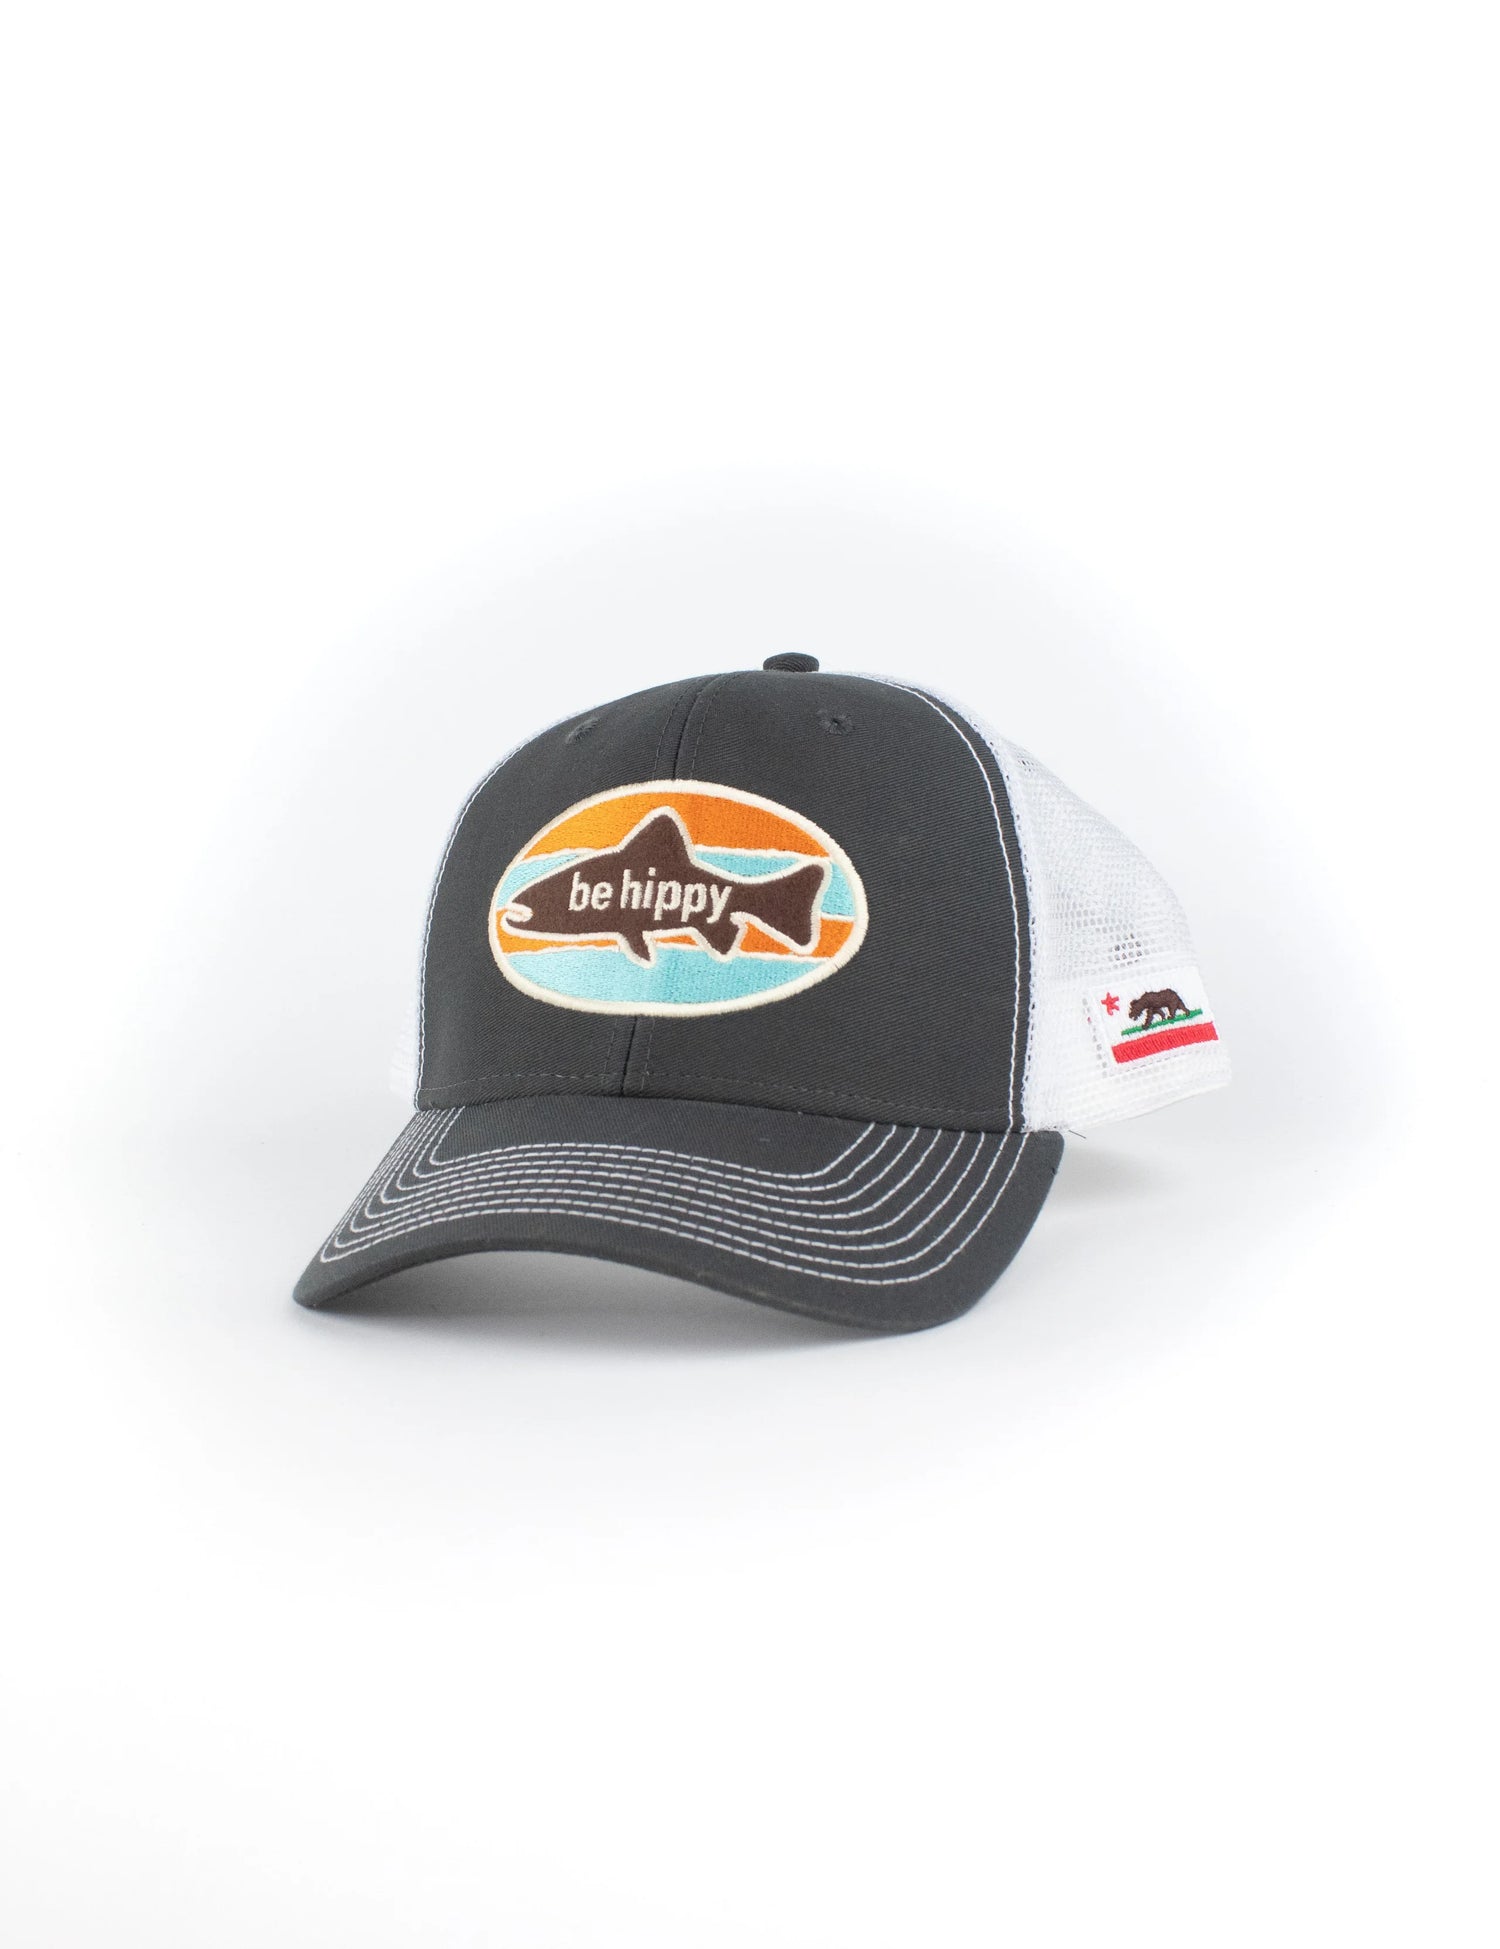 Be Hippy Fish Logo Trucker Hat - California Flag Gray with White Mesh